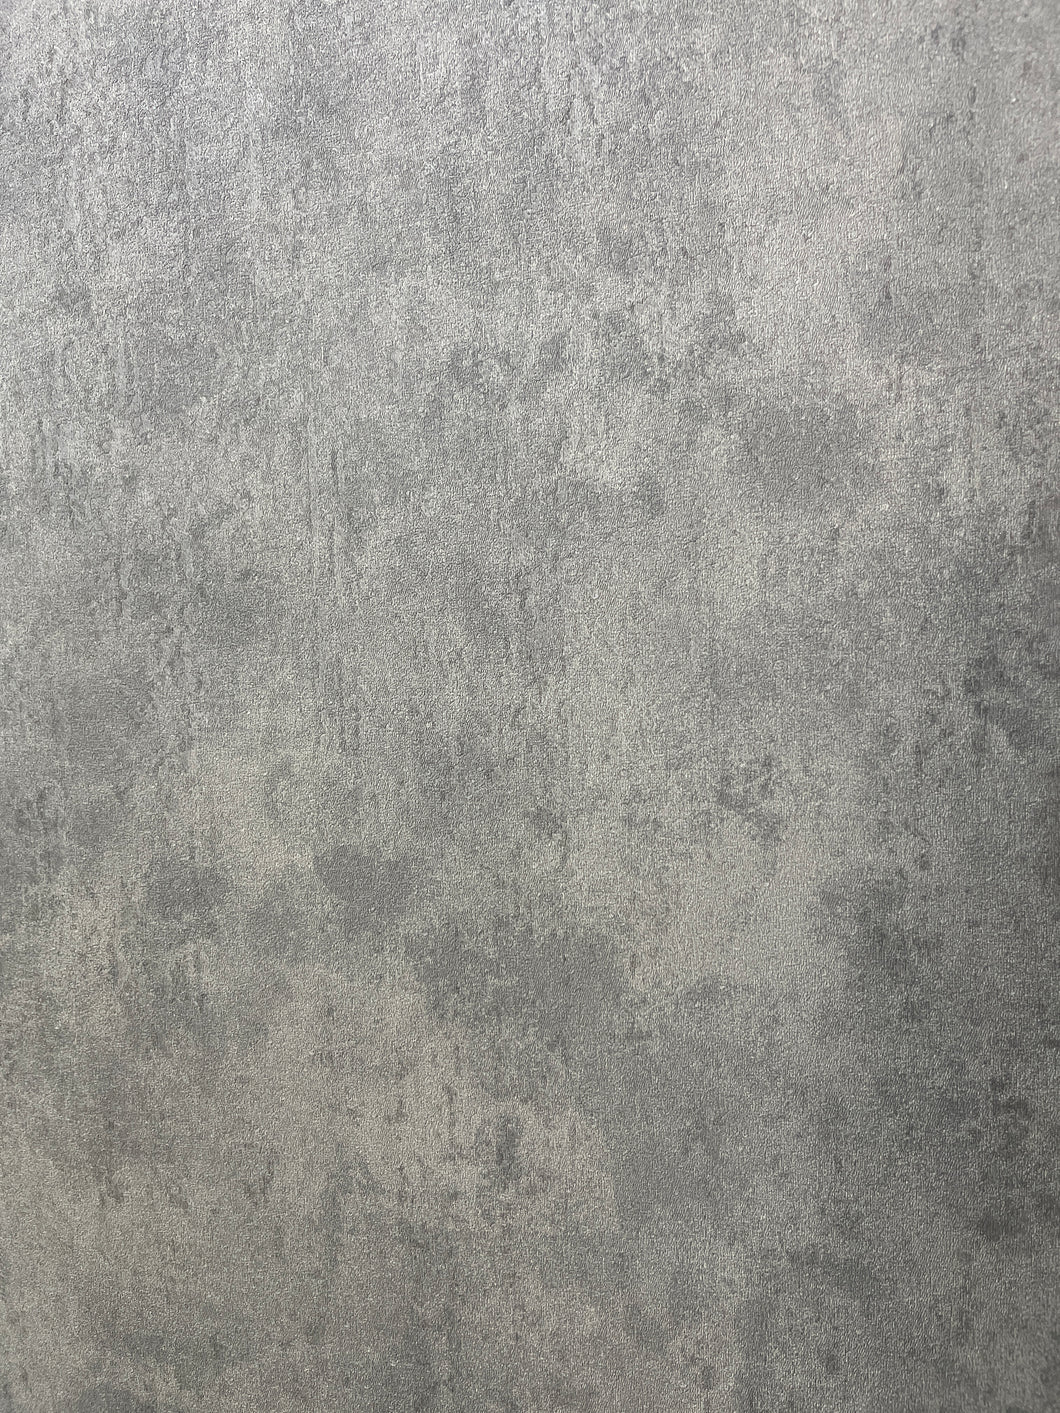 Grey Concrete MS 711-6